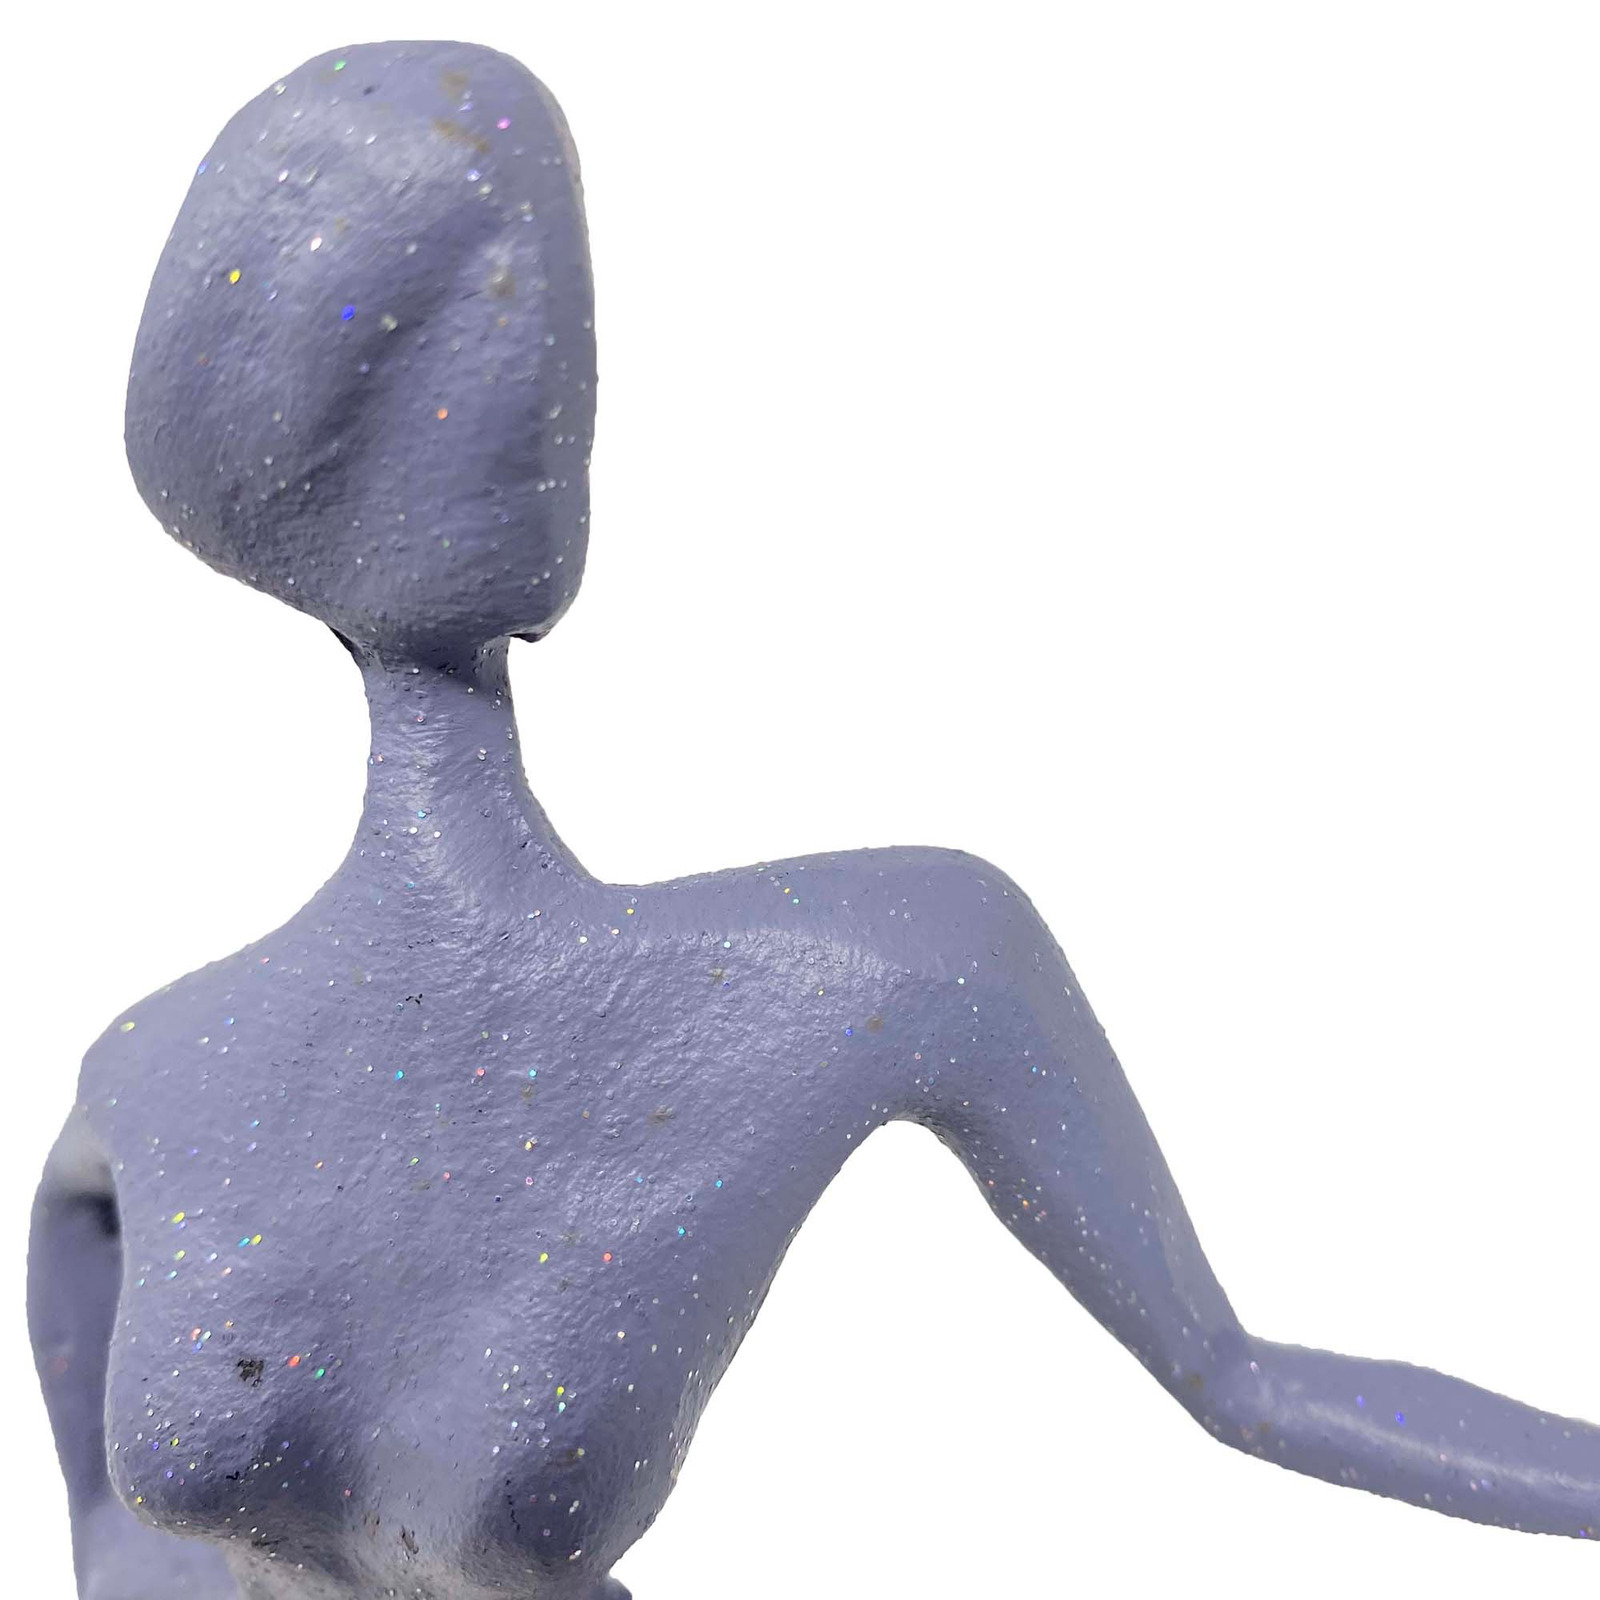 Elur Brigitte Chic Lady Iron Figurine 27Cm Grey Shimmer Statue Statues Elur   